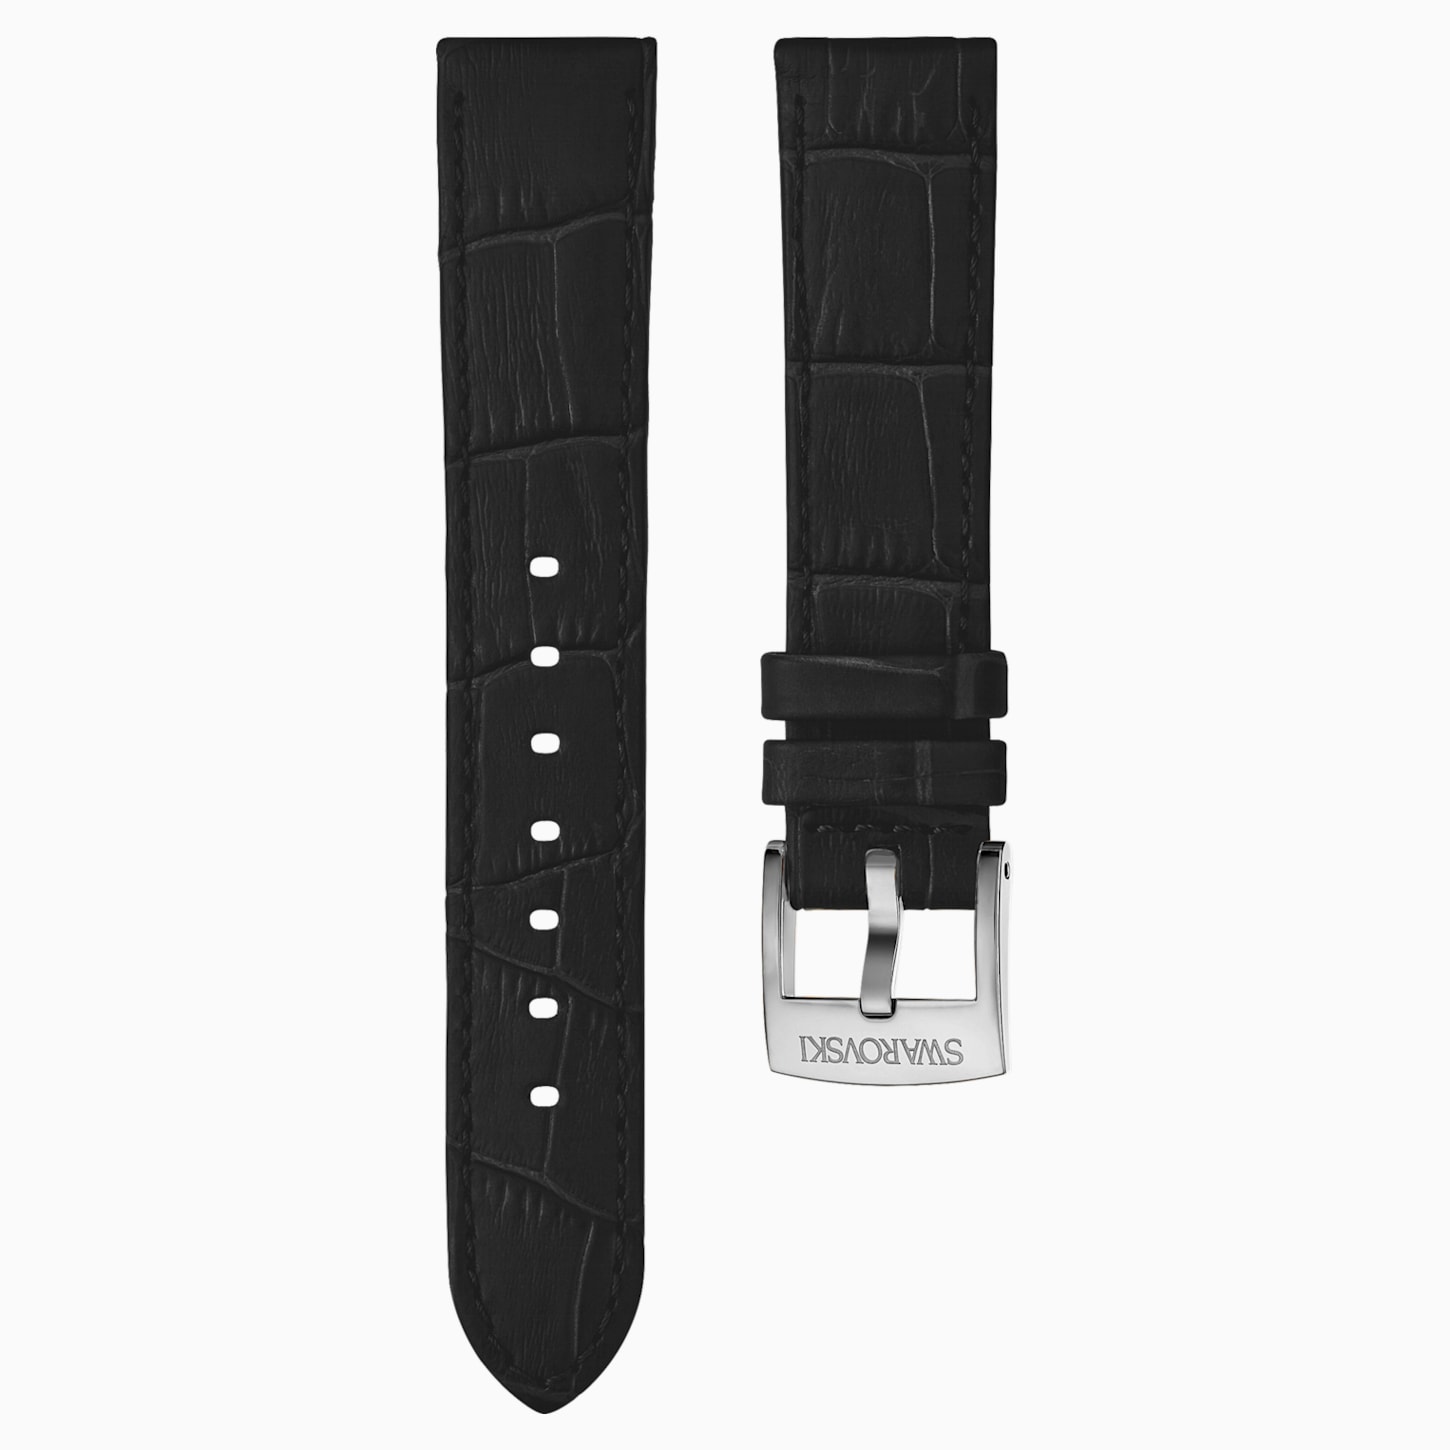 20mm black metal watch strap